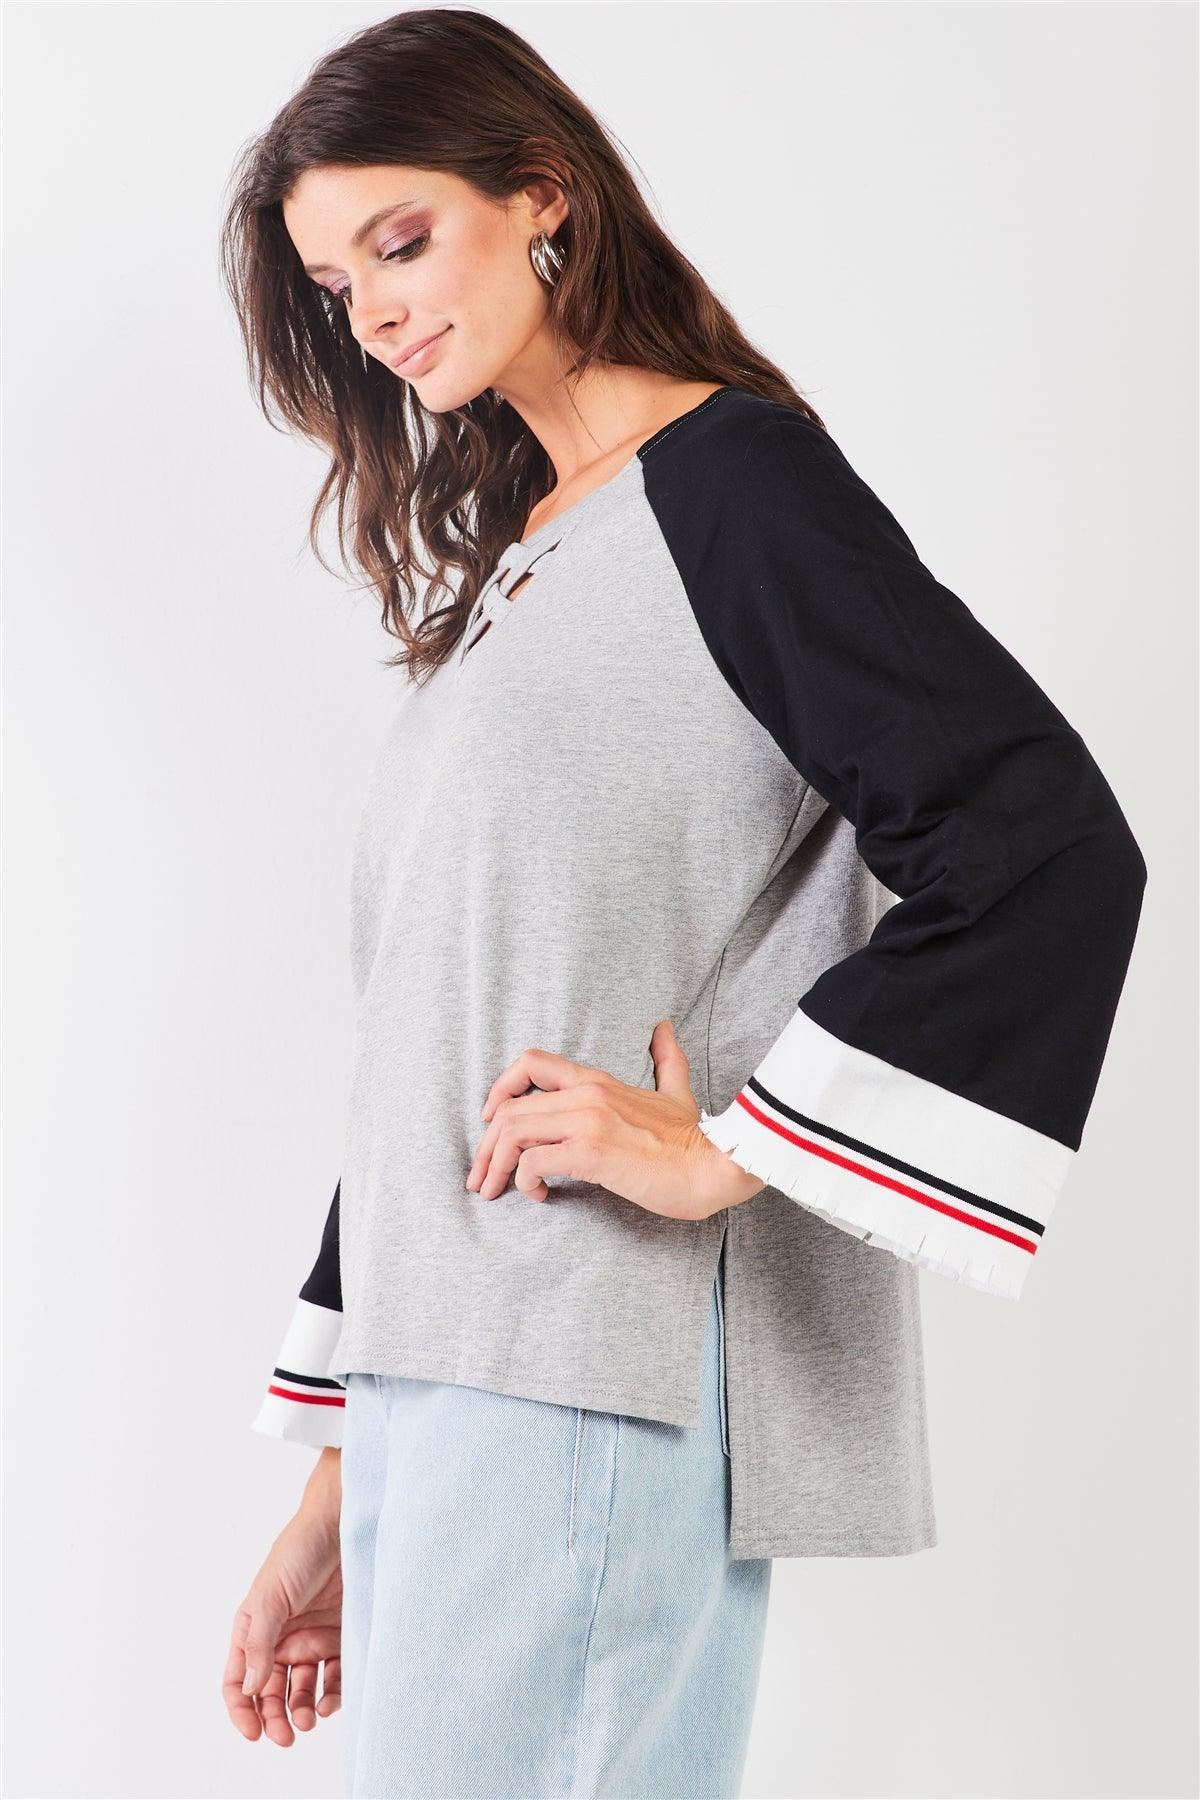 Heather Grey & Black Lace-Up V-Neck Long Bell Sleeve Asymmetrical Sweatshirt /2-1-2